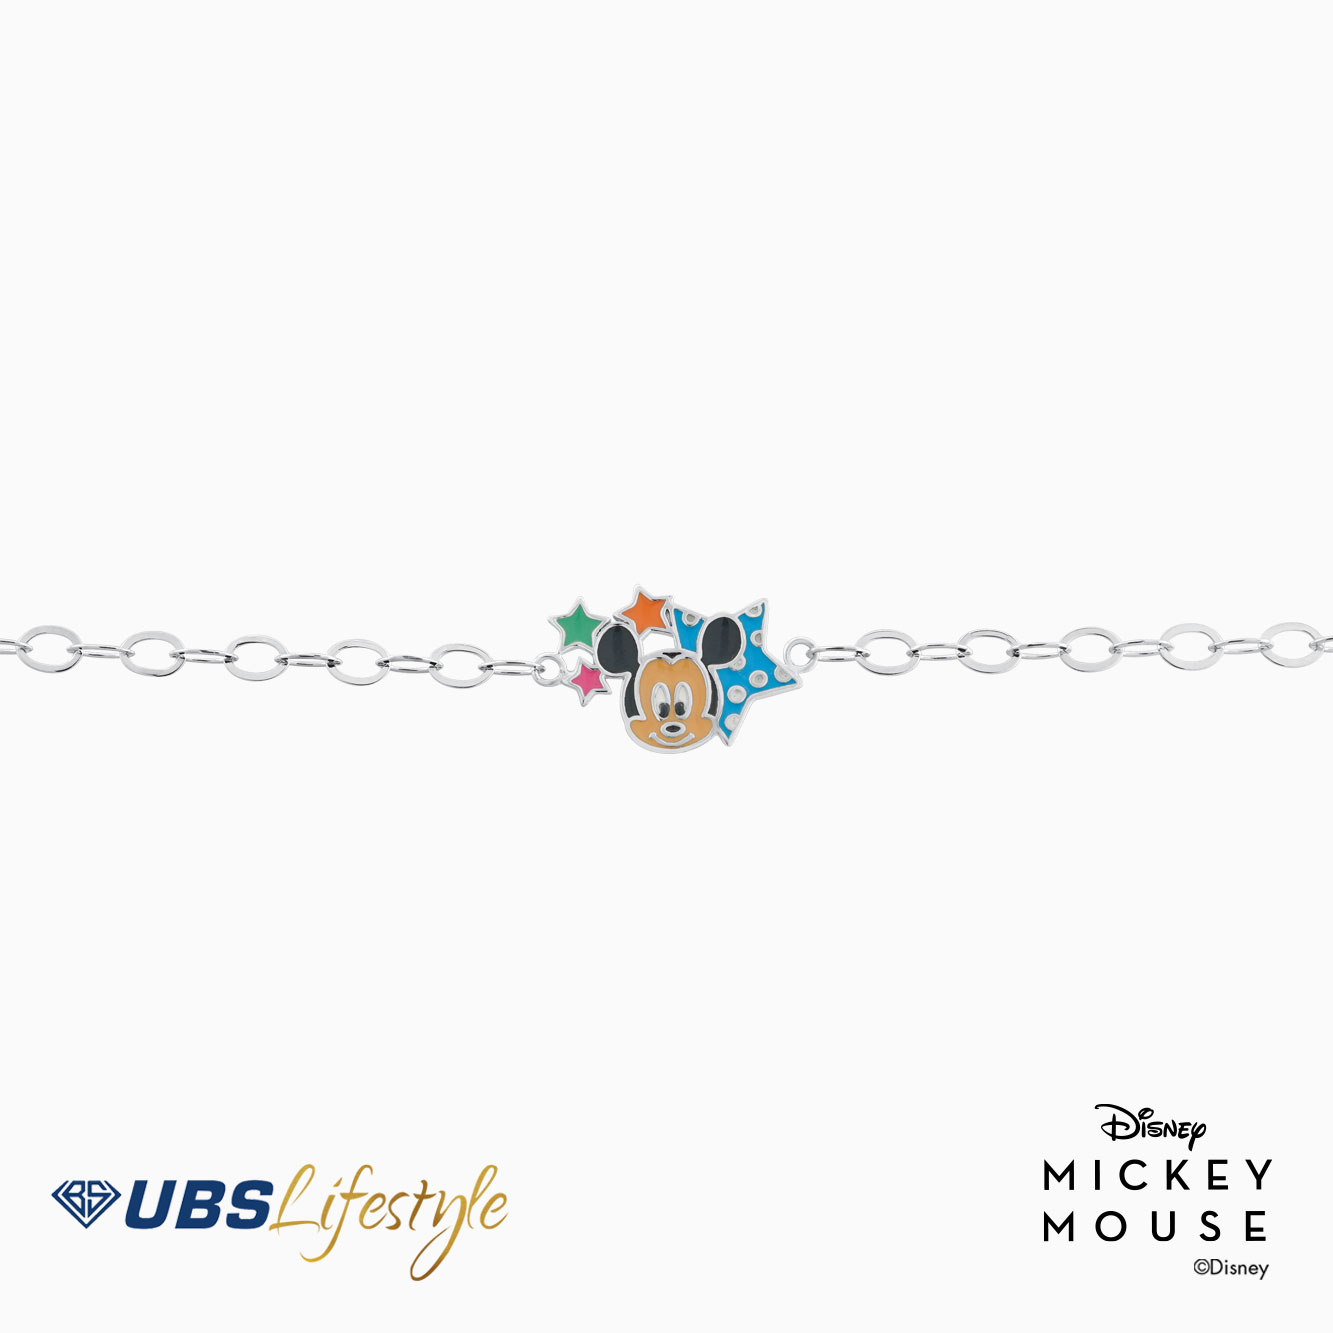 UBS Gelang Emas Anak Disney Mickey Mouse - Kgy0068 - 17K